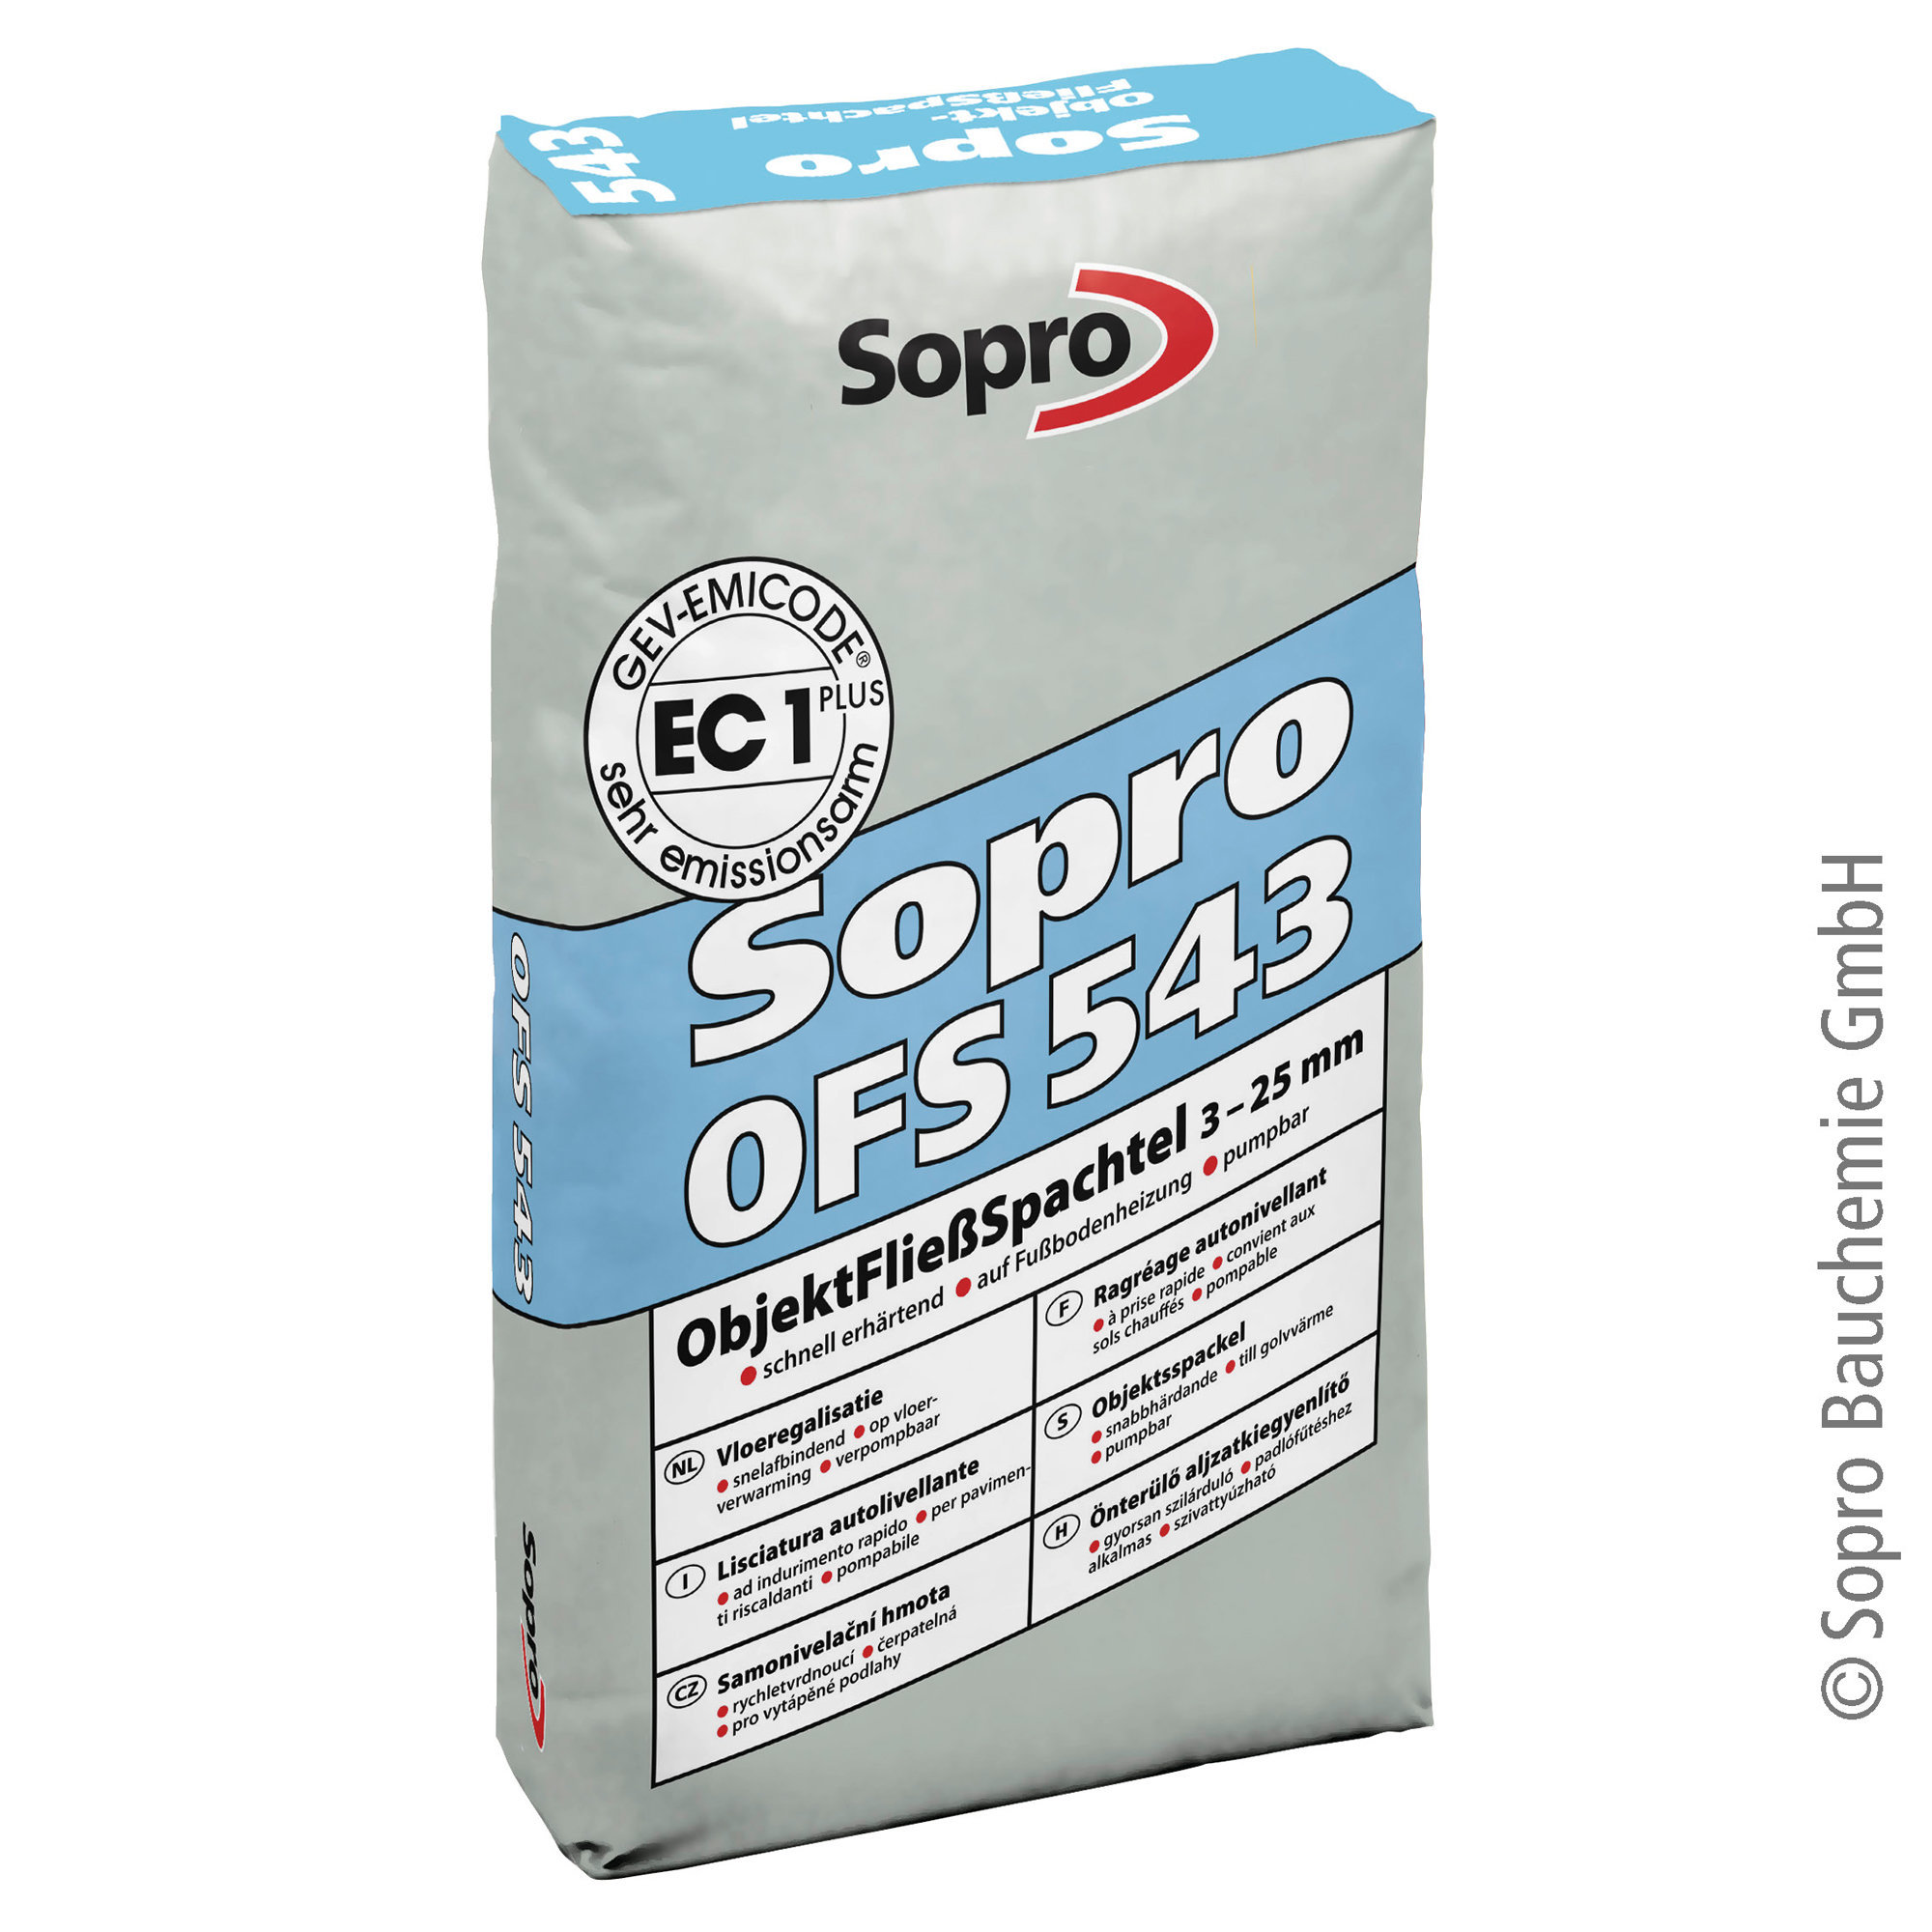 Sopro ObjektFließSpachtel OFS 543